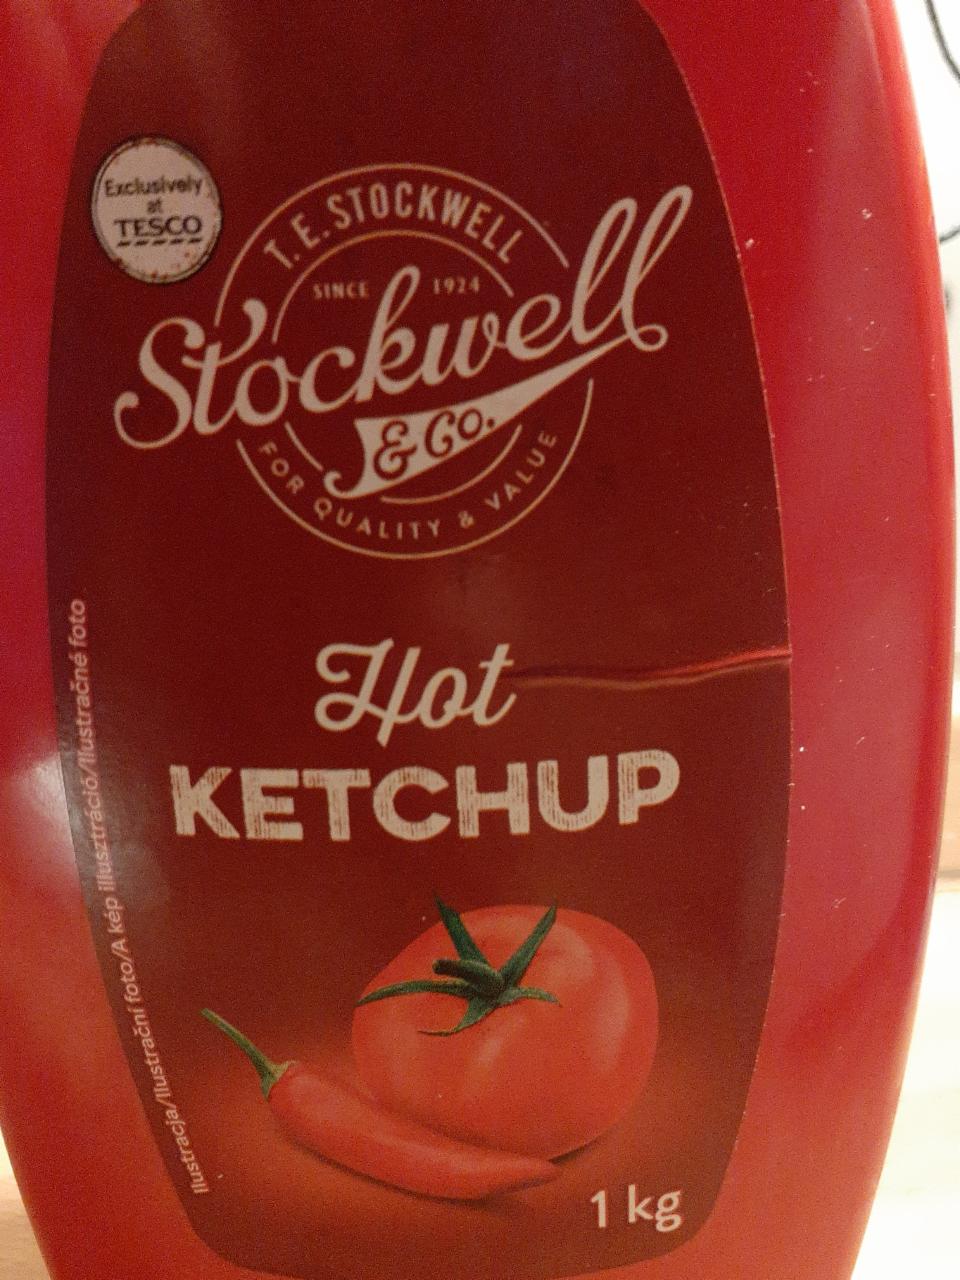 Képek - Hot Ketchup Stockwell & Co.